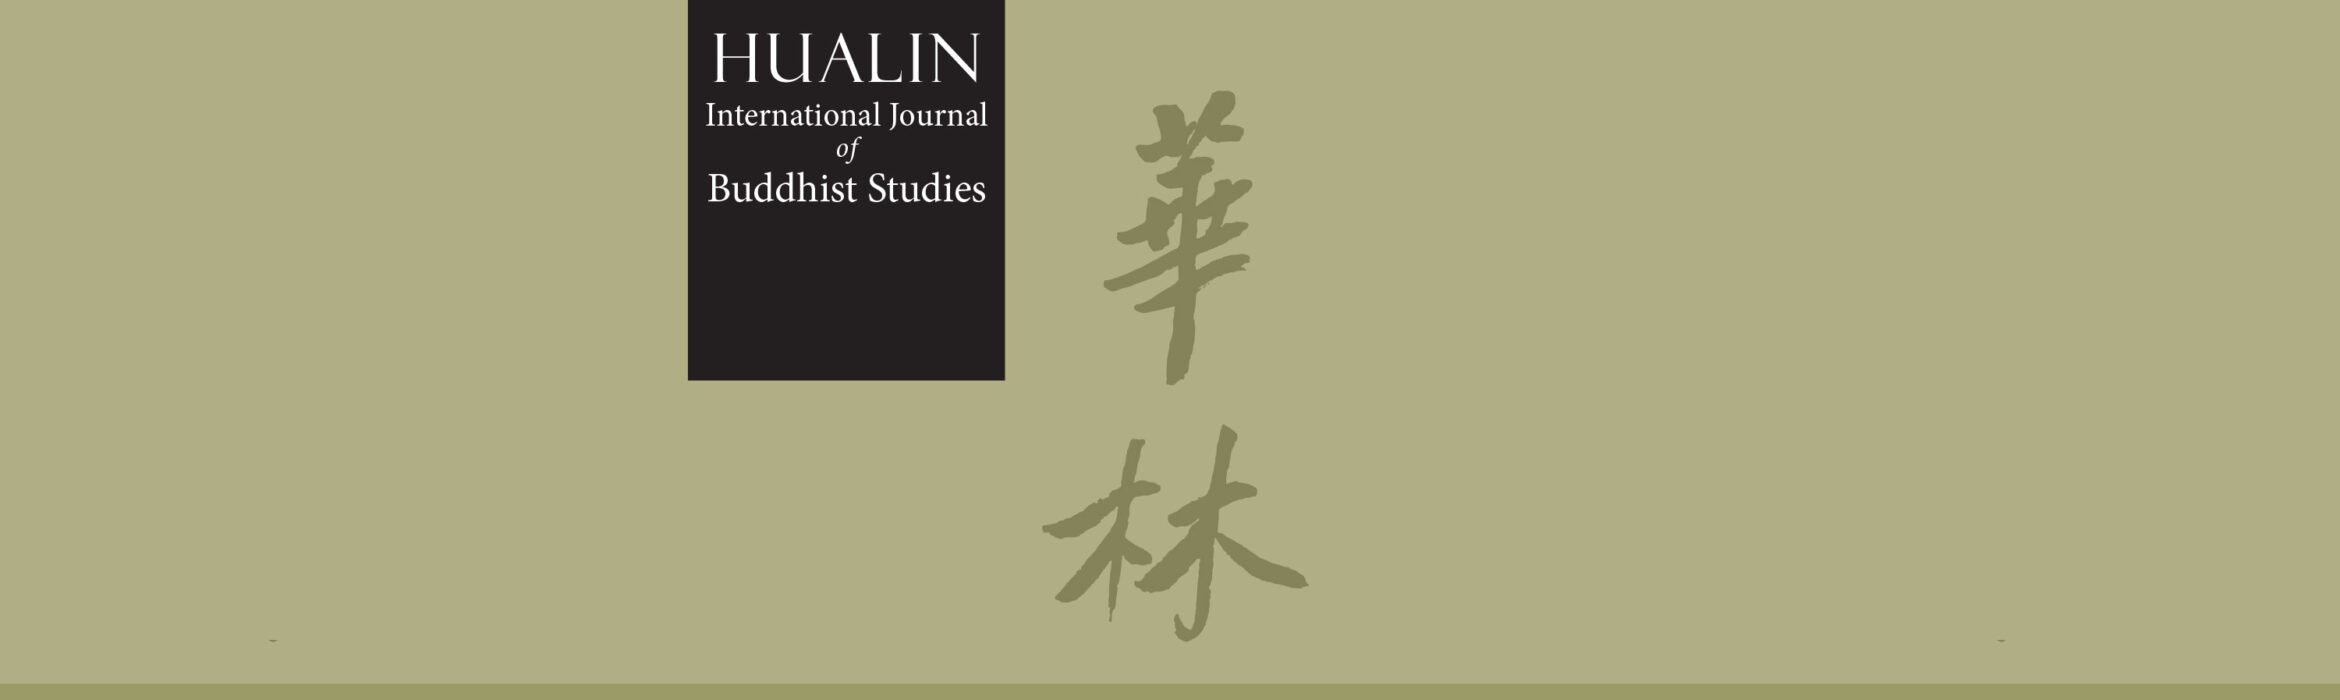 Launch of Hualin International Journal of Buddhist Studies (HIJBS)